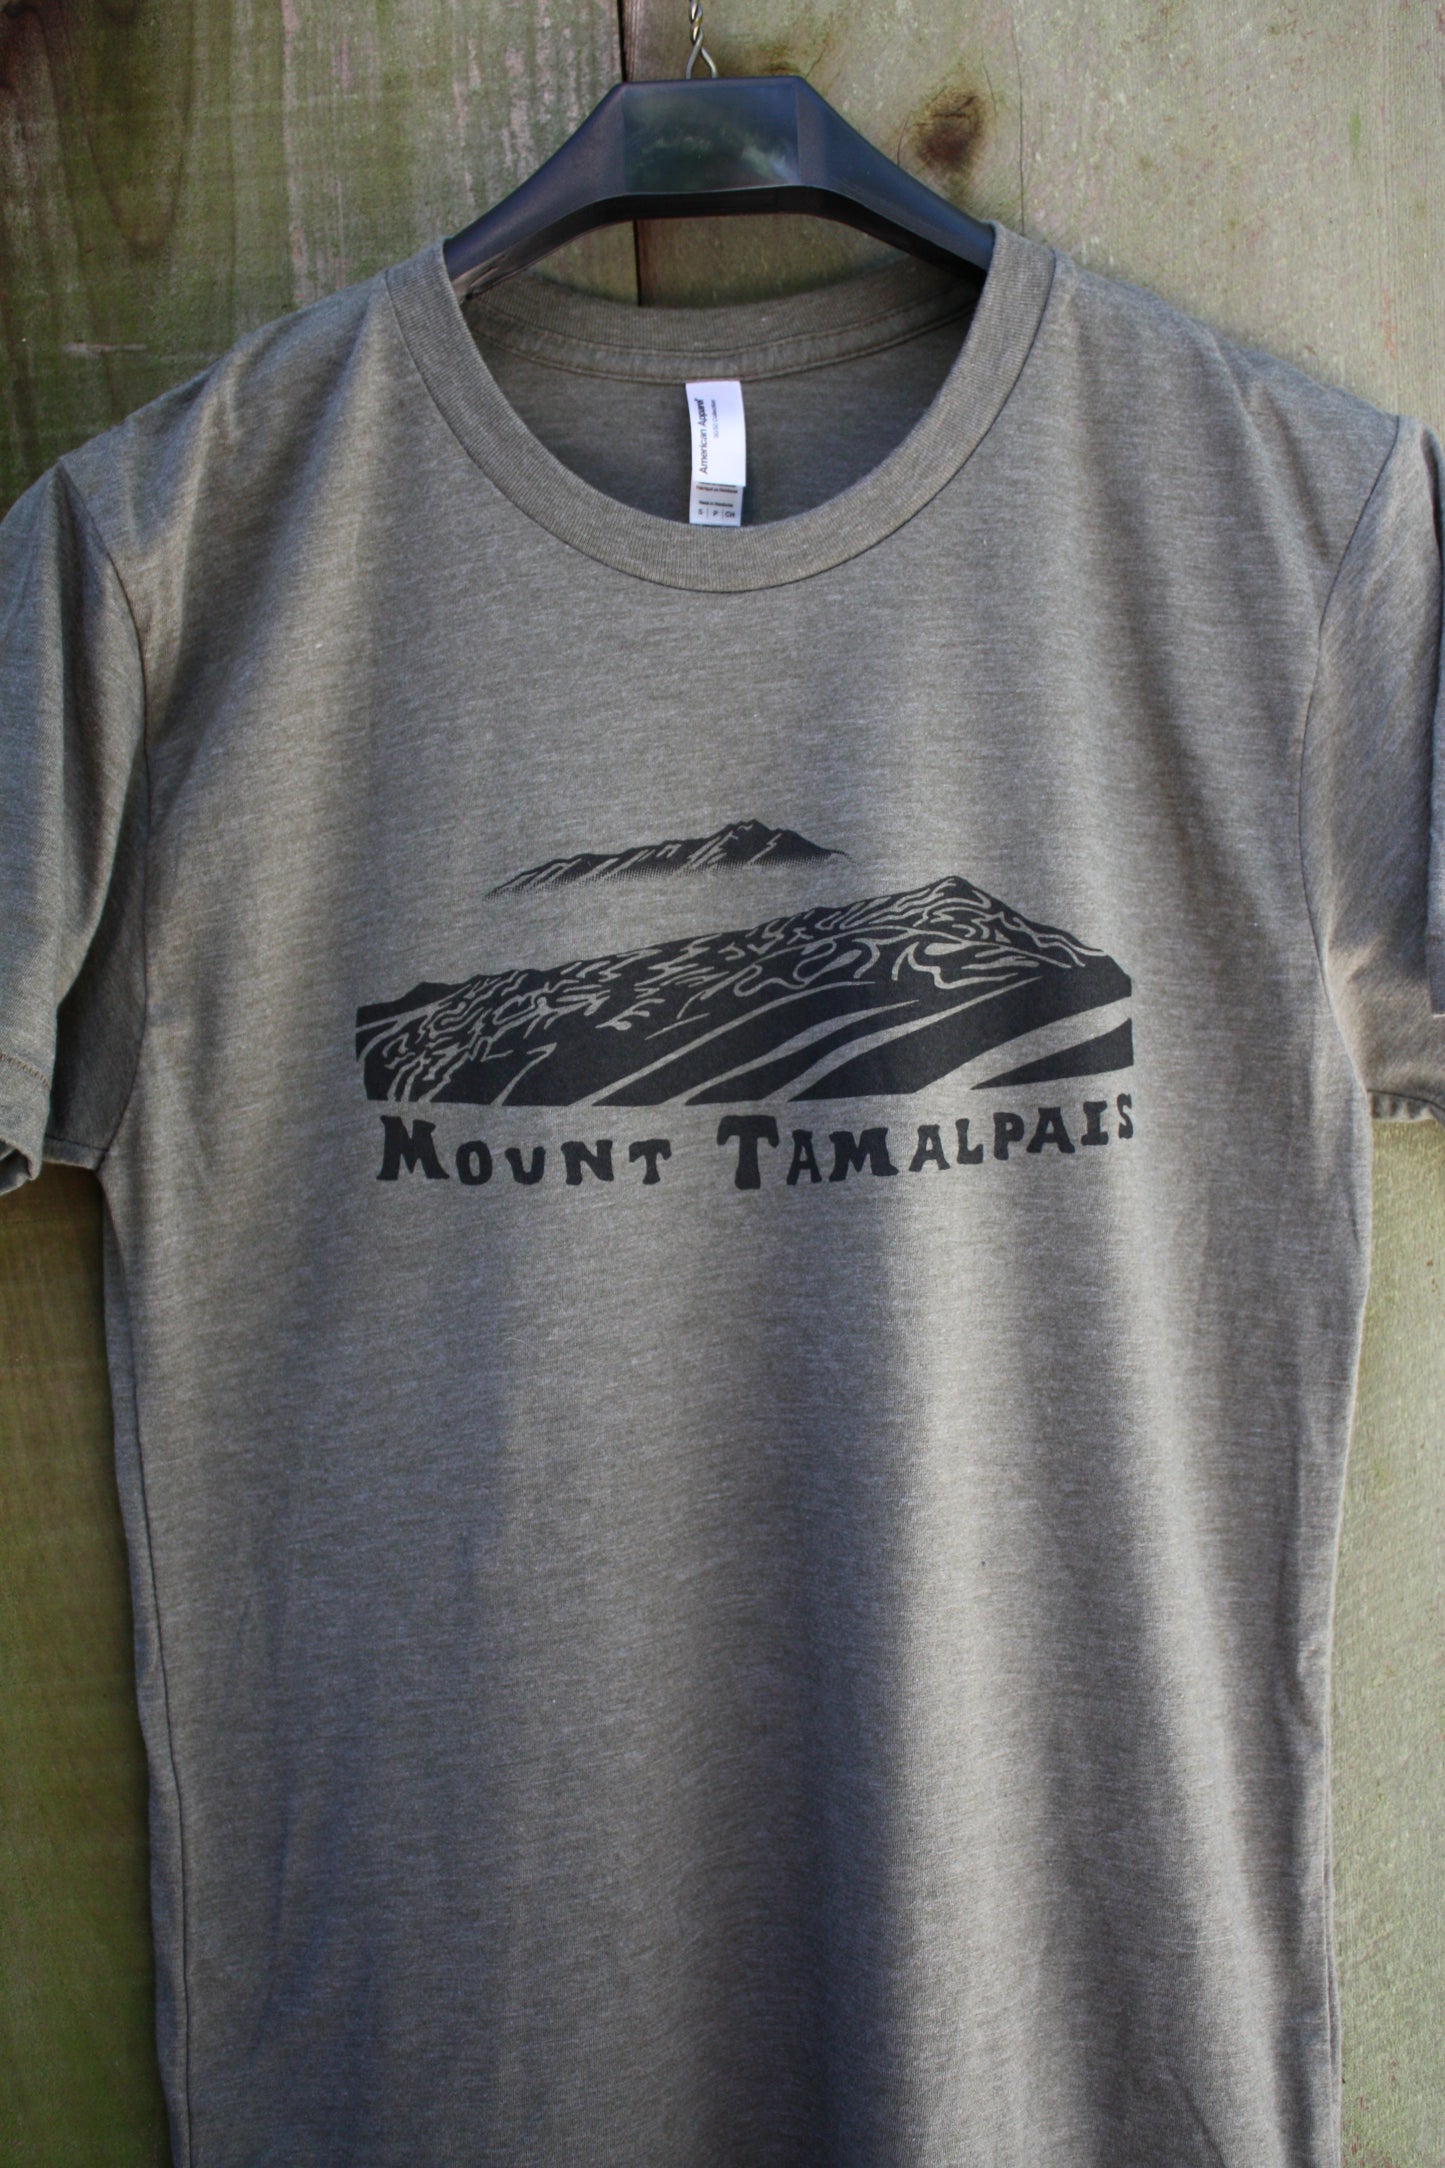 Mount Tamalpais Trail T-Shirt Unisex